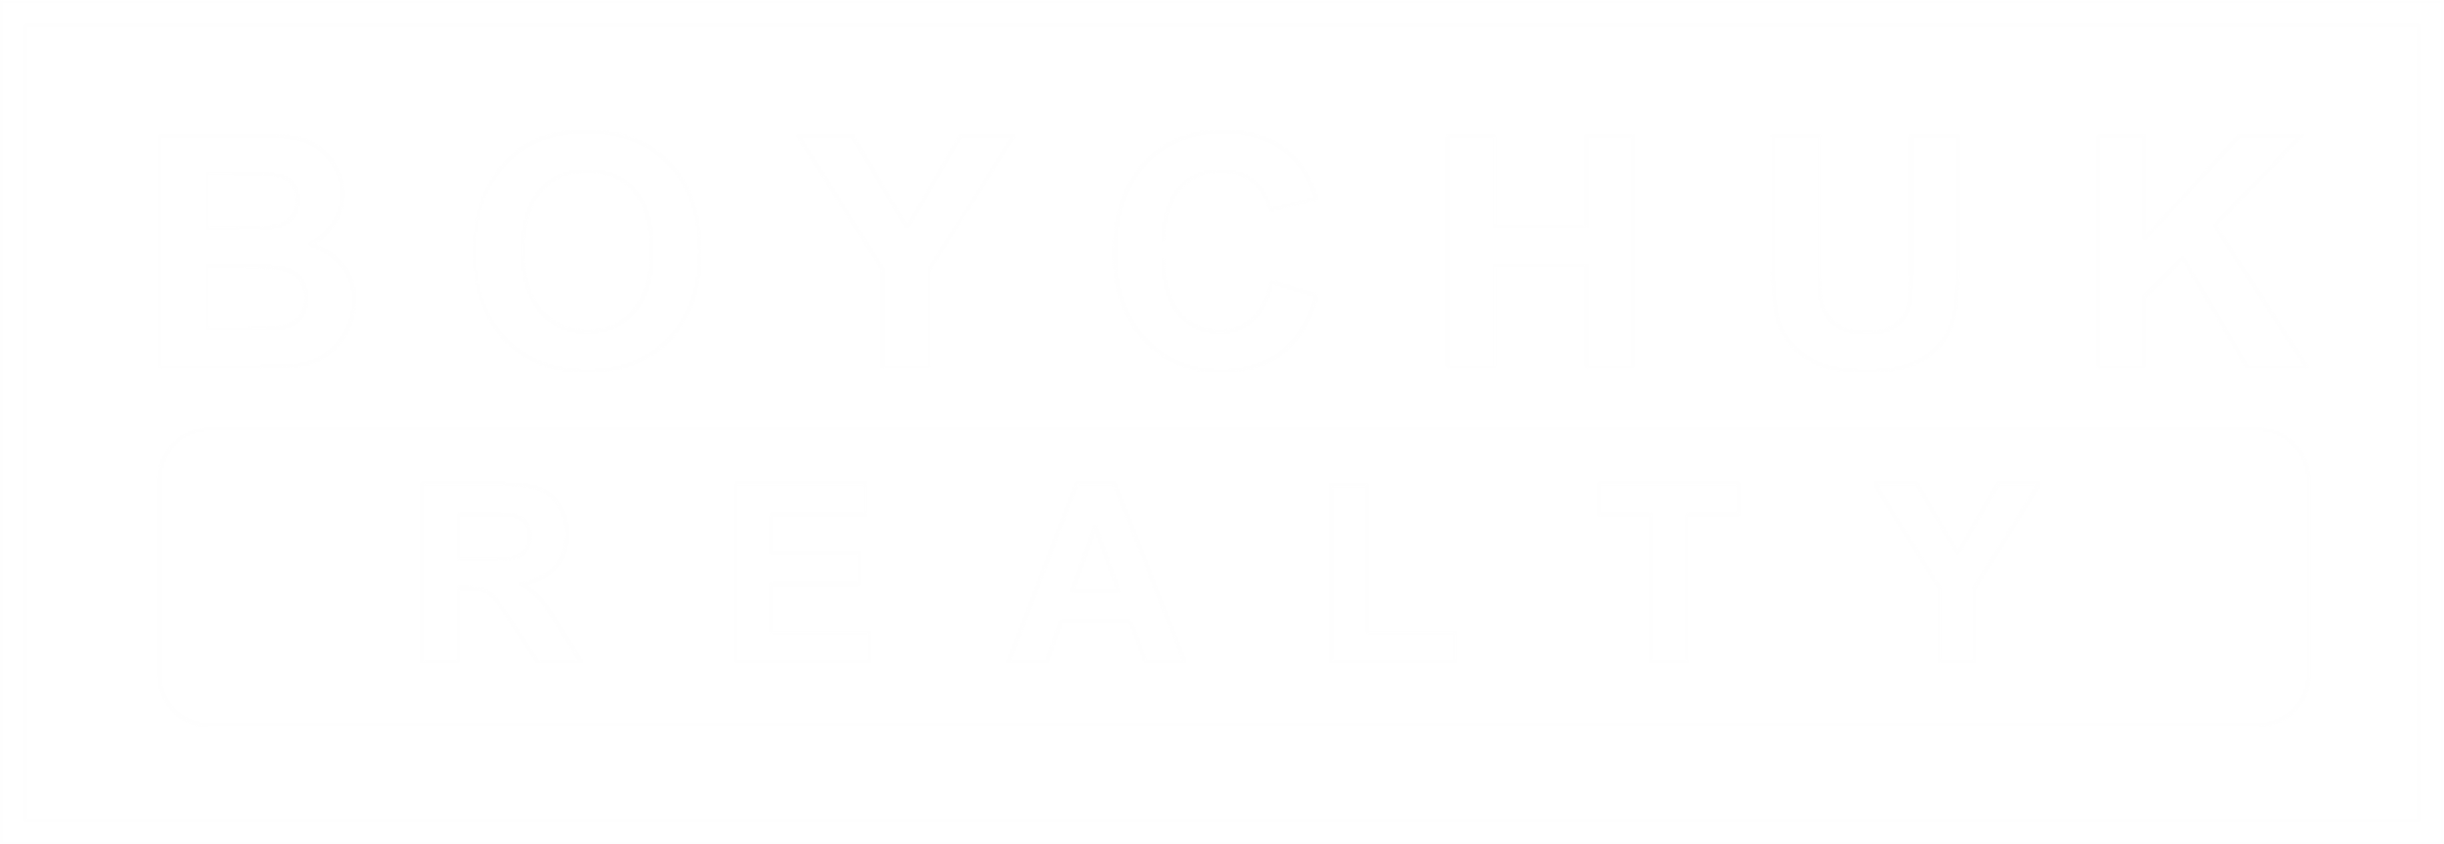 Boychuk Realty Ltd. - Mike Boychuk Team